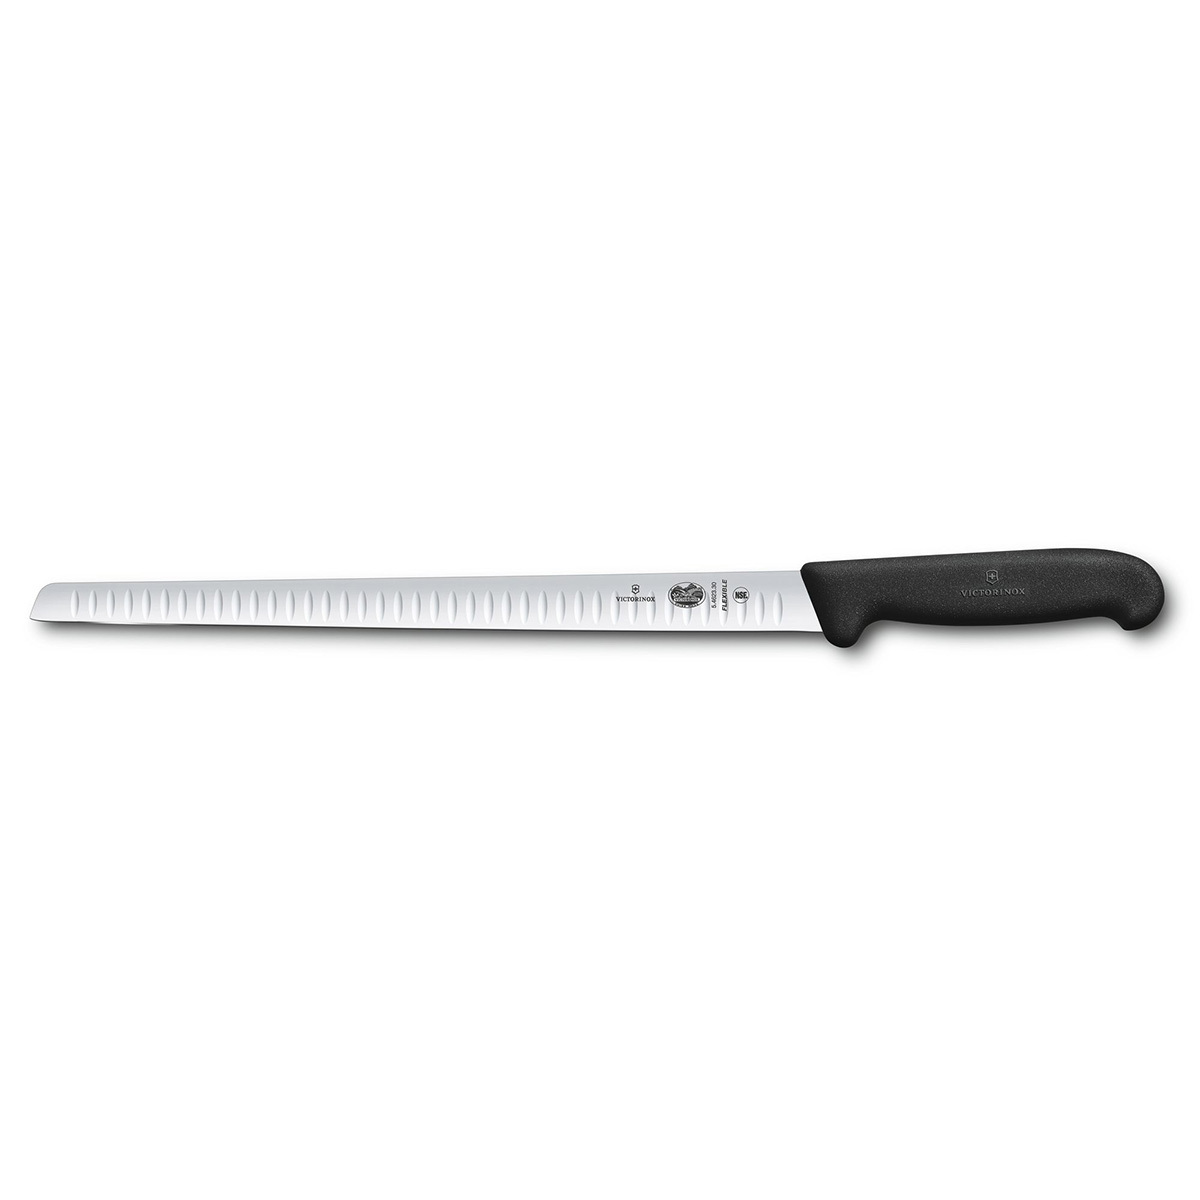 Кухонный нож рыбы Victorinox 5.4623.30 кухонный топорик victorinox 180 мм 5 4063 18